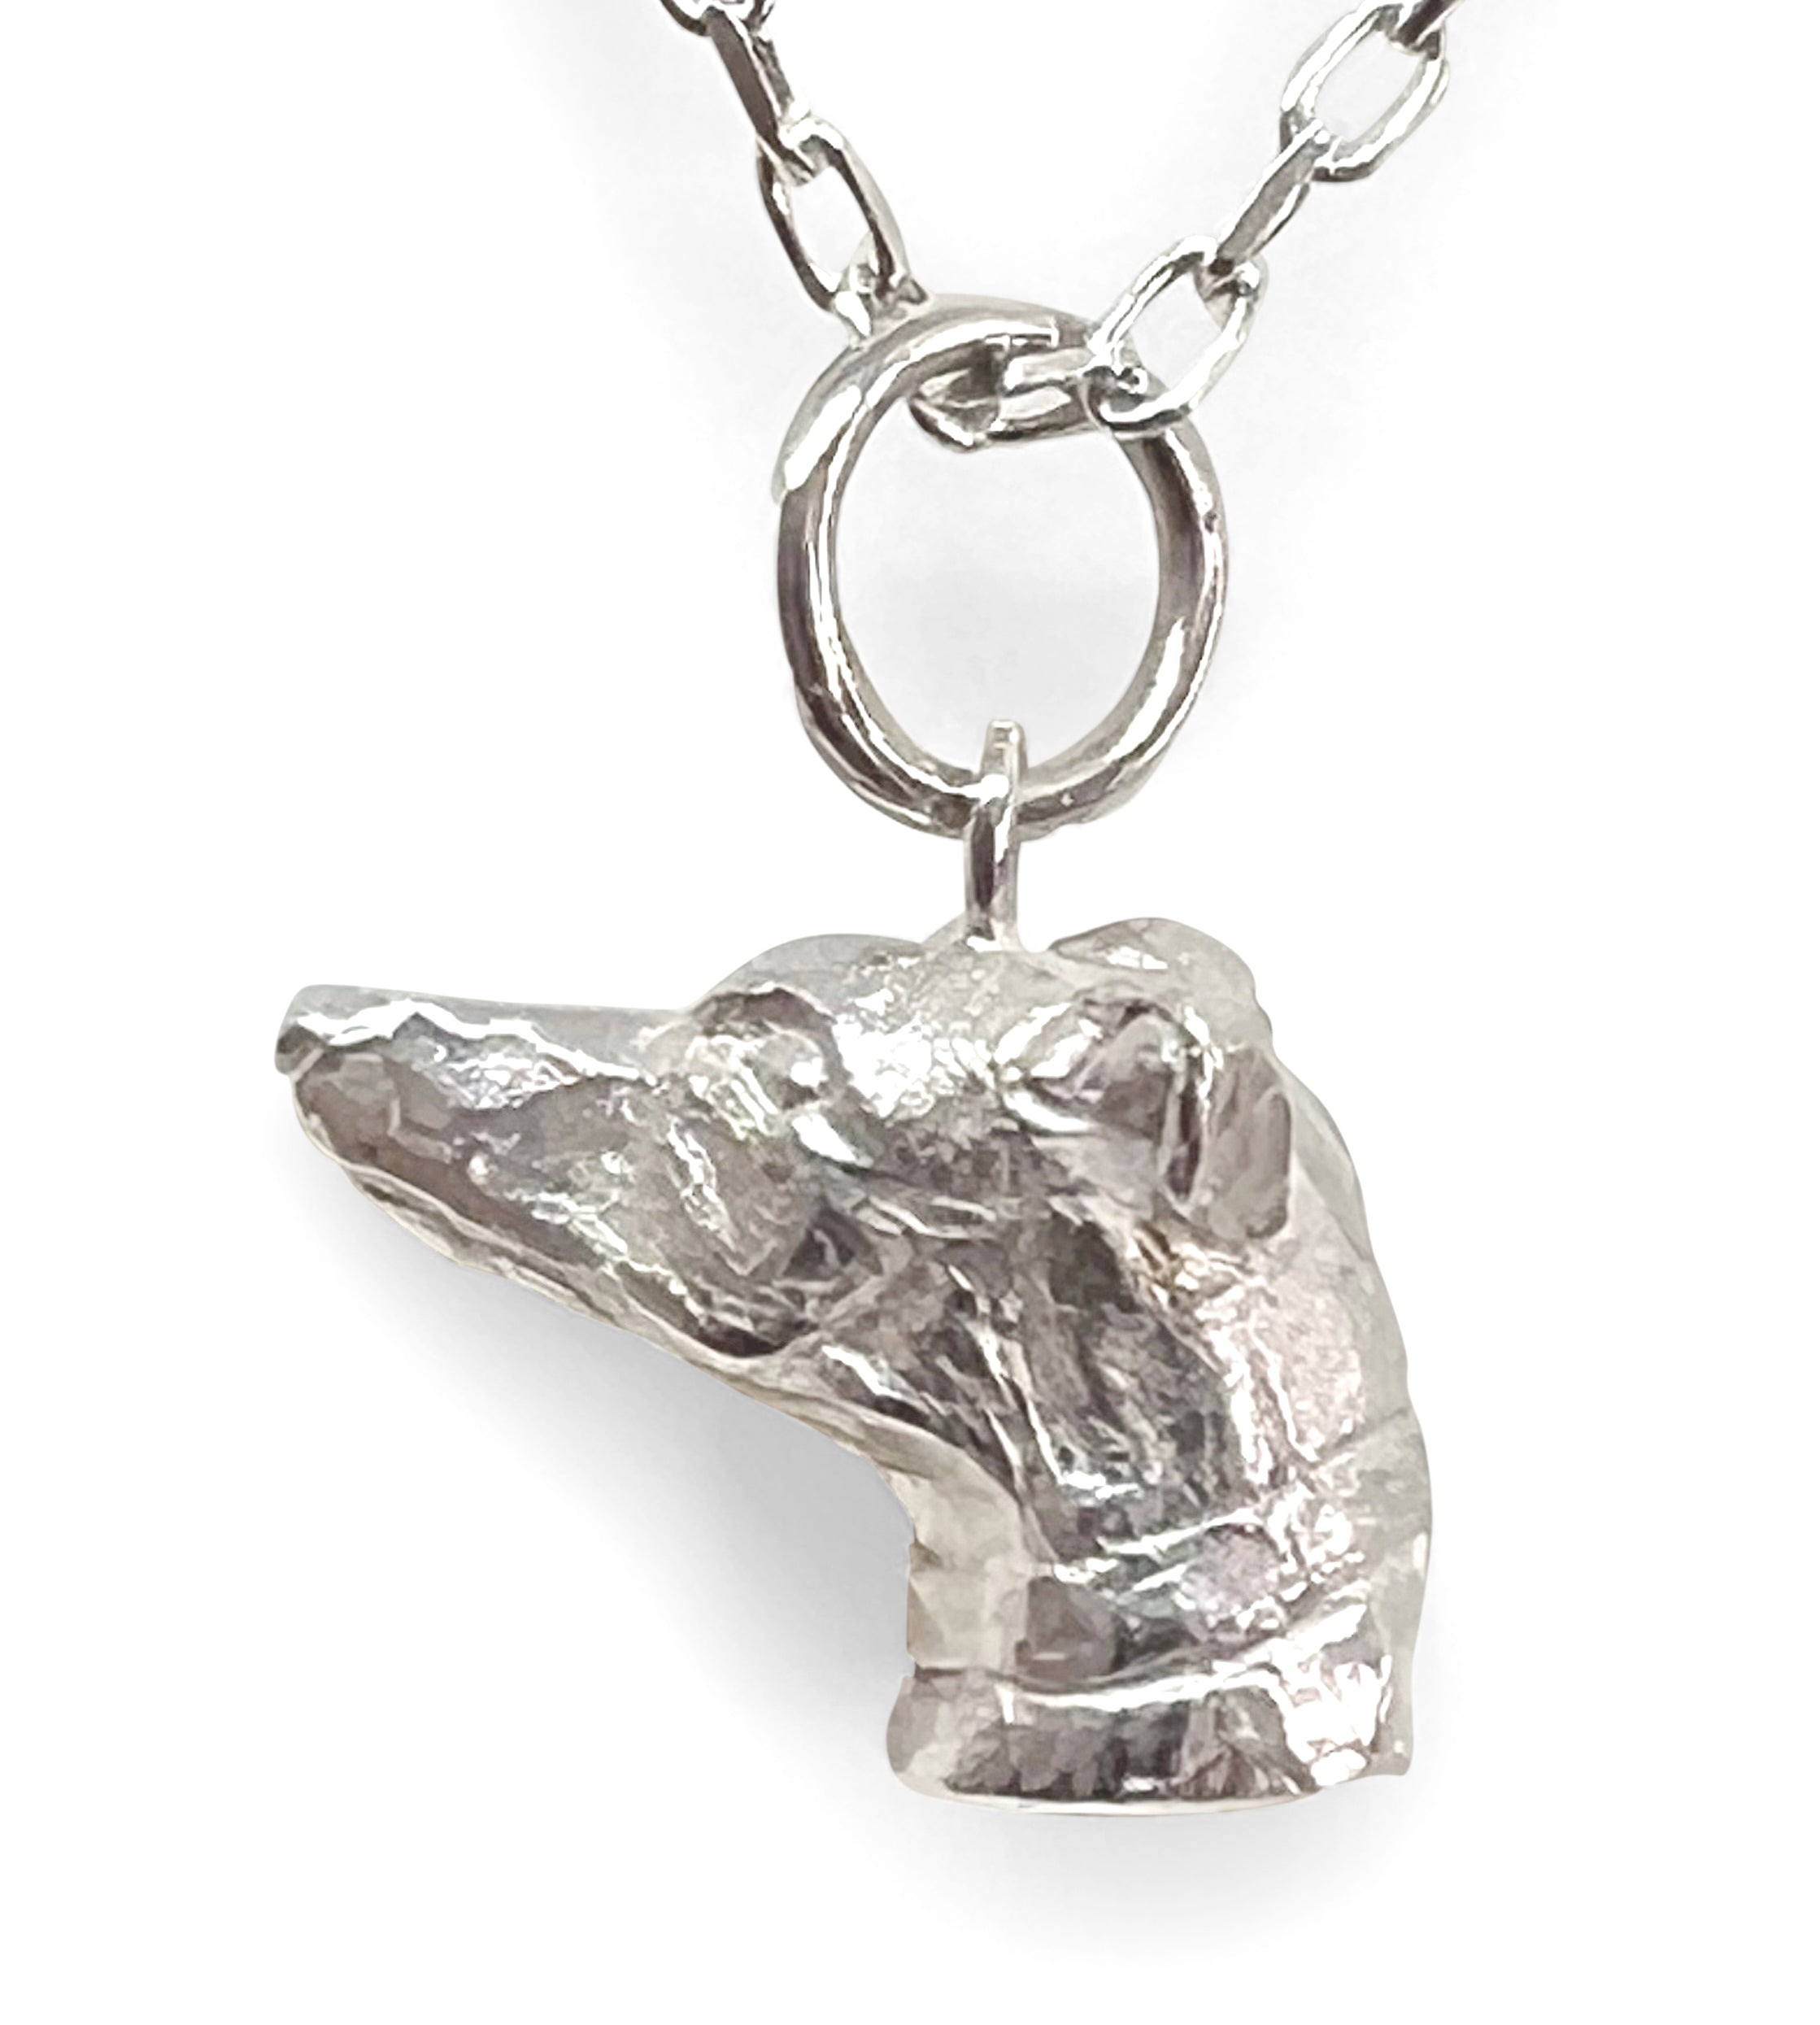 Greyhound Pendant by Paul Eaton Sculptor